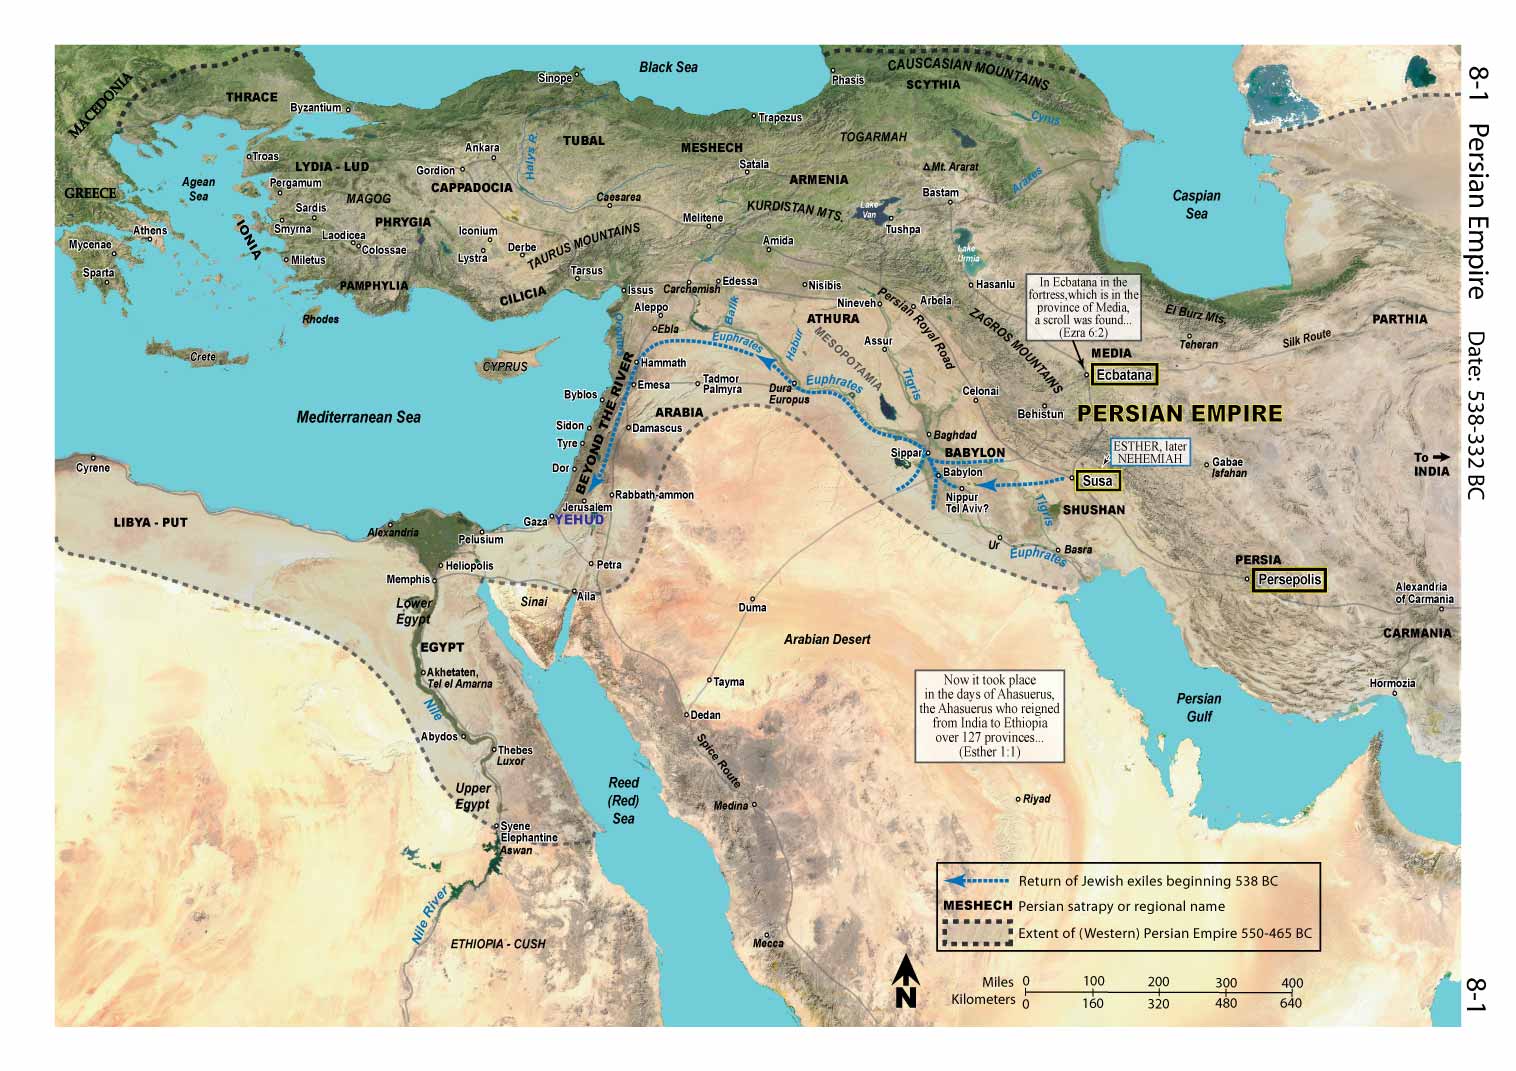 The Persian empire during the intertestamental period